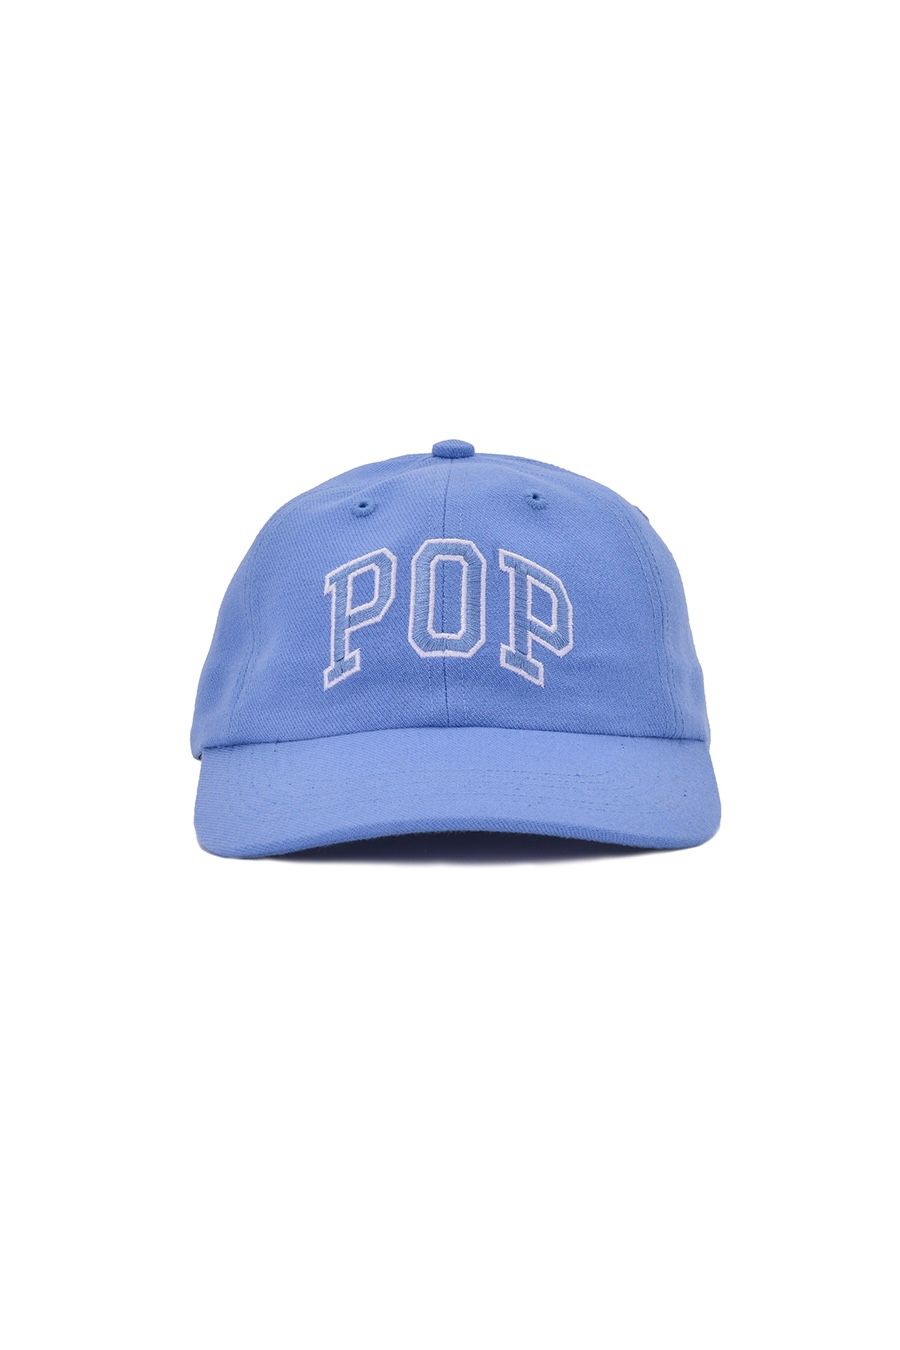 Pop Trading Company - arch sixpanel hat -blue shadow- 23ss drop1